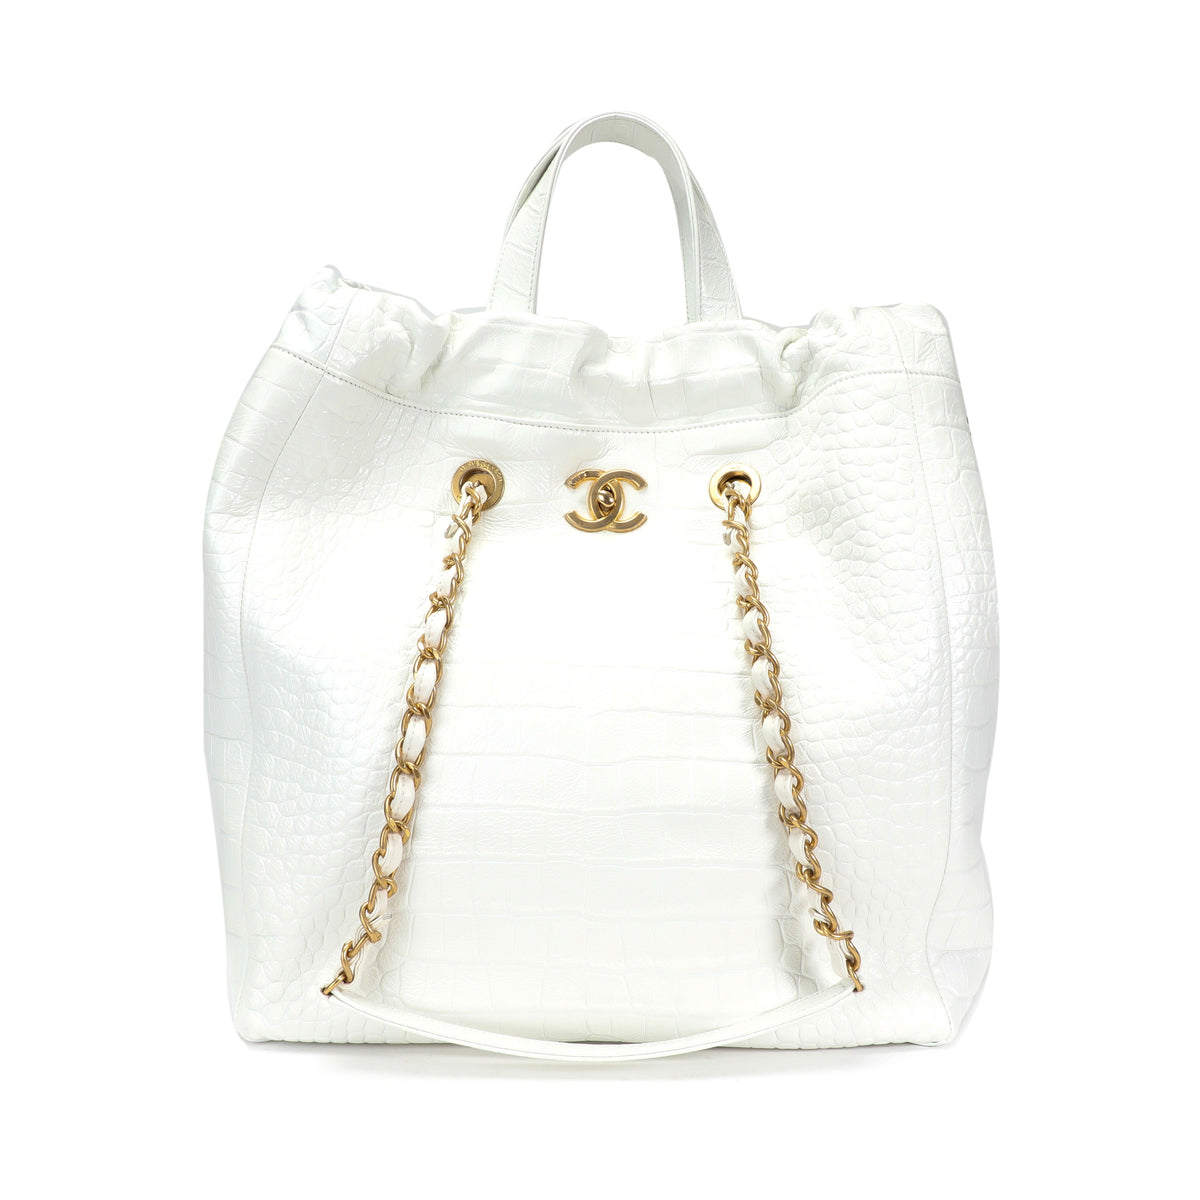 Chanel Large Embossed Shopping Bag - Totes, Handbags